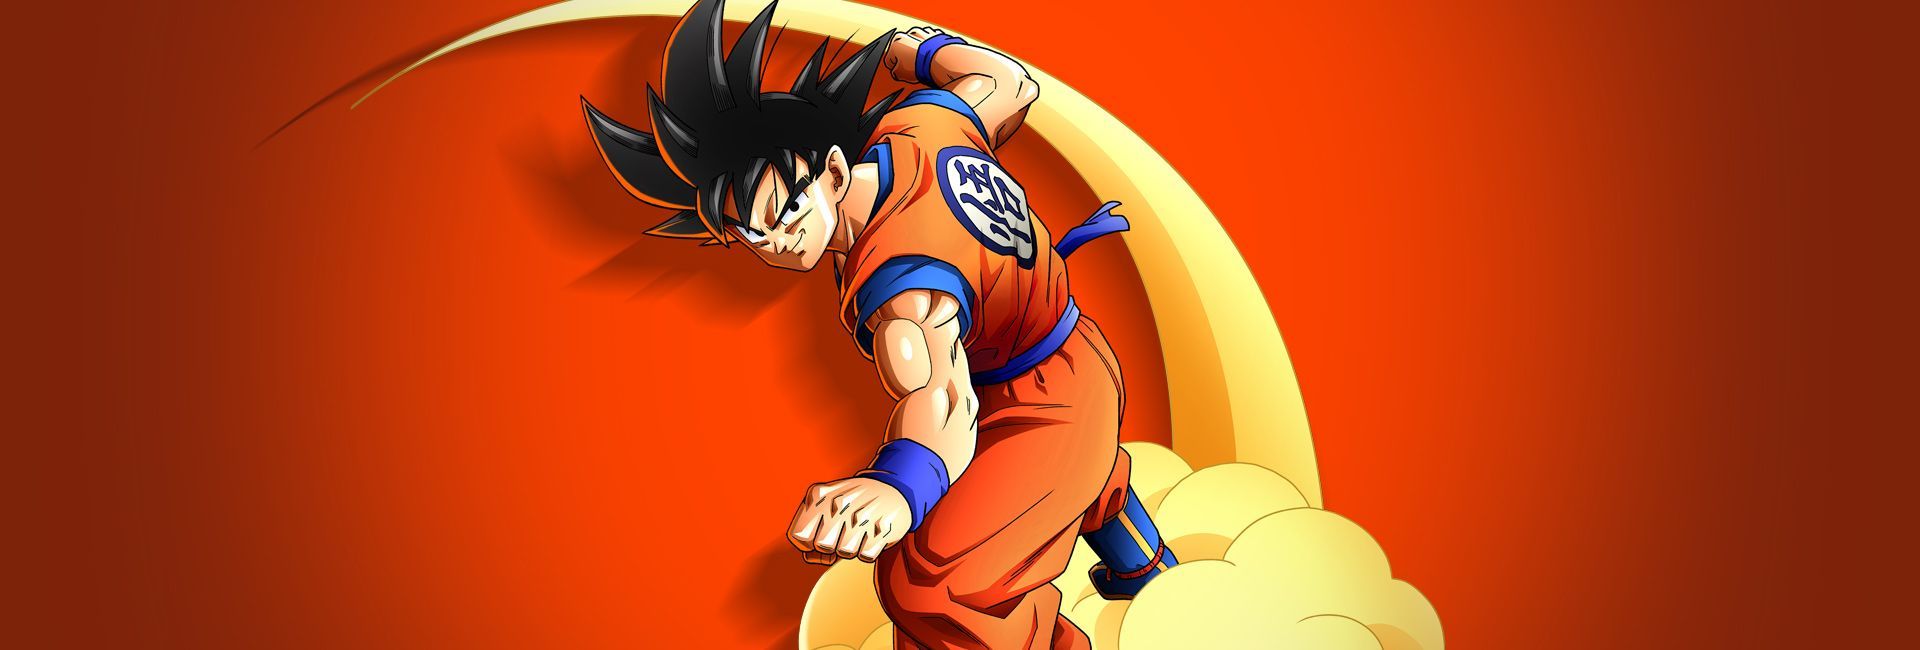 Bannière Youtube 2048X1152 Dbz - Banner Template Dragon Ball Z Kazuto Gamer Med Speed Art By Odd ...